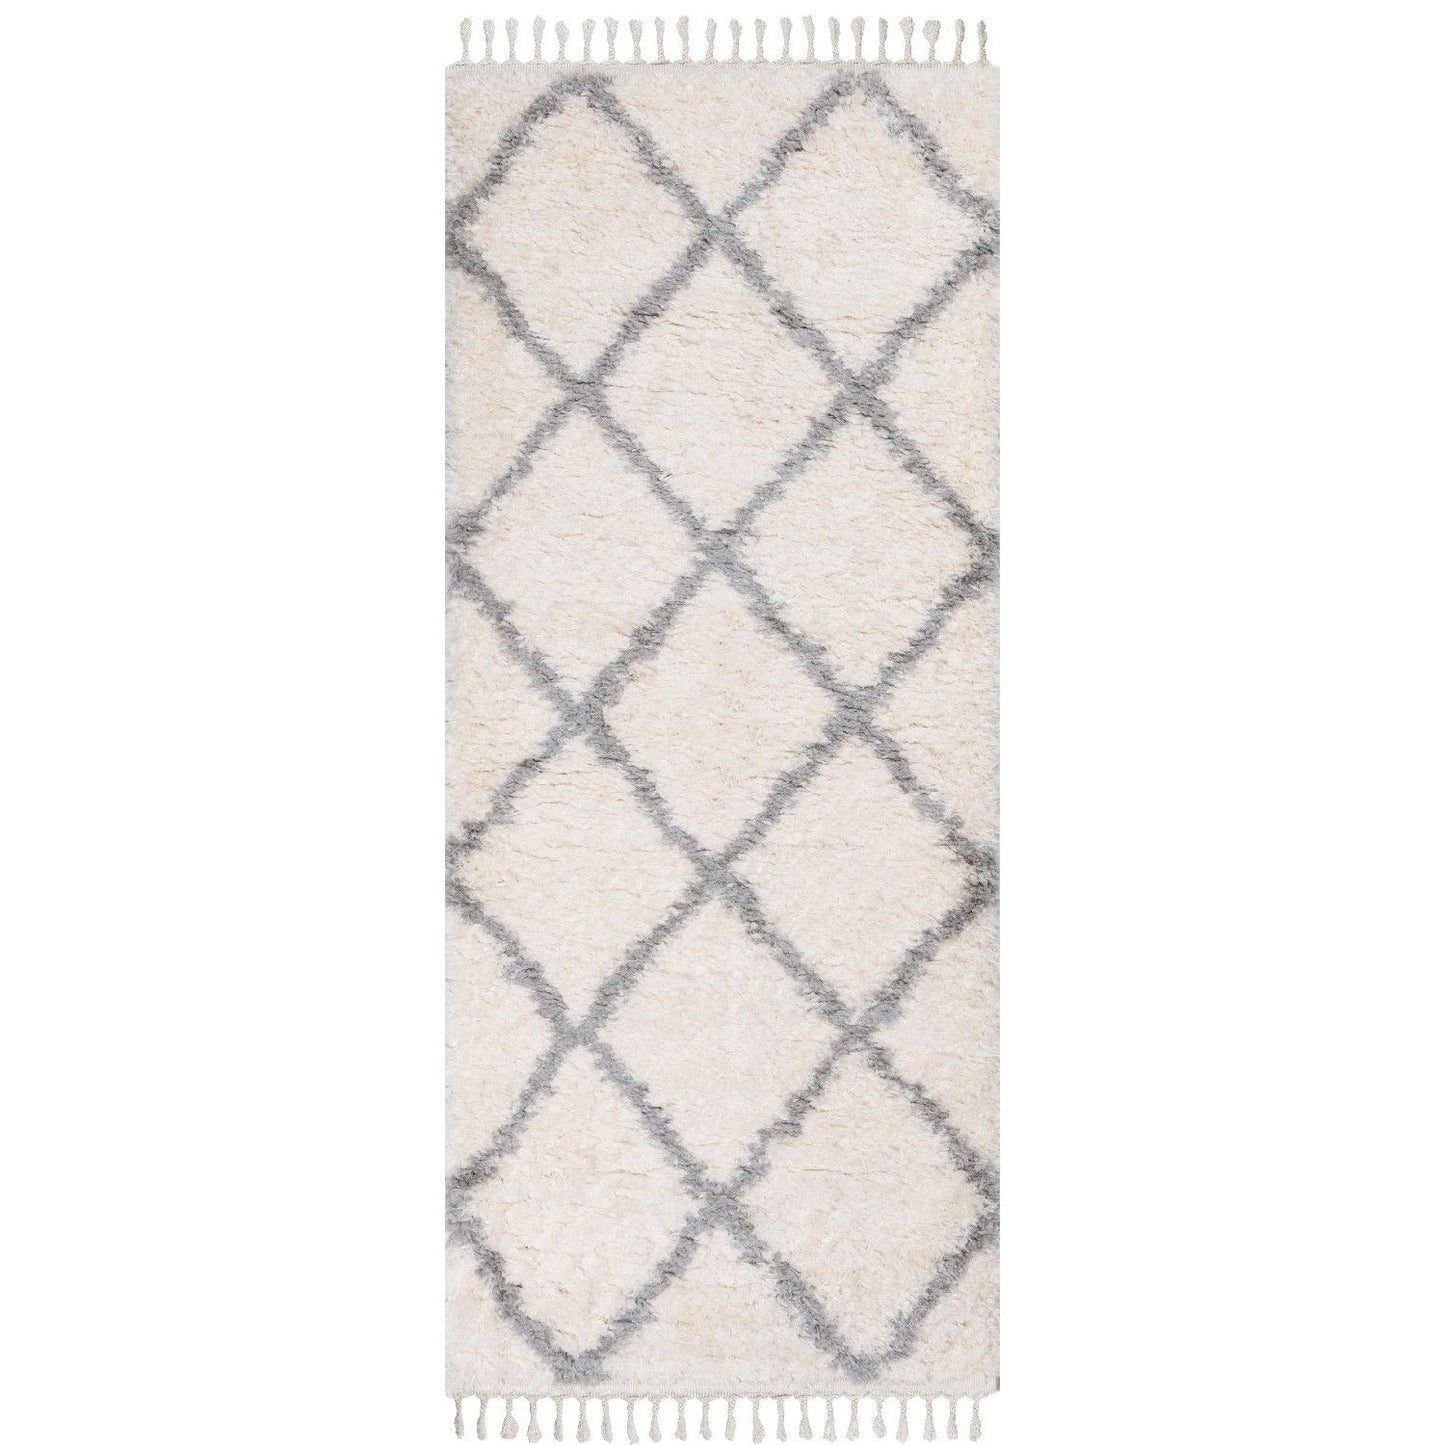 Post 3204 - Hall Carpet (100 x 150)